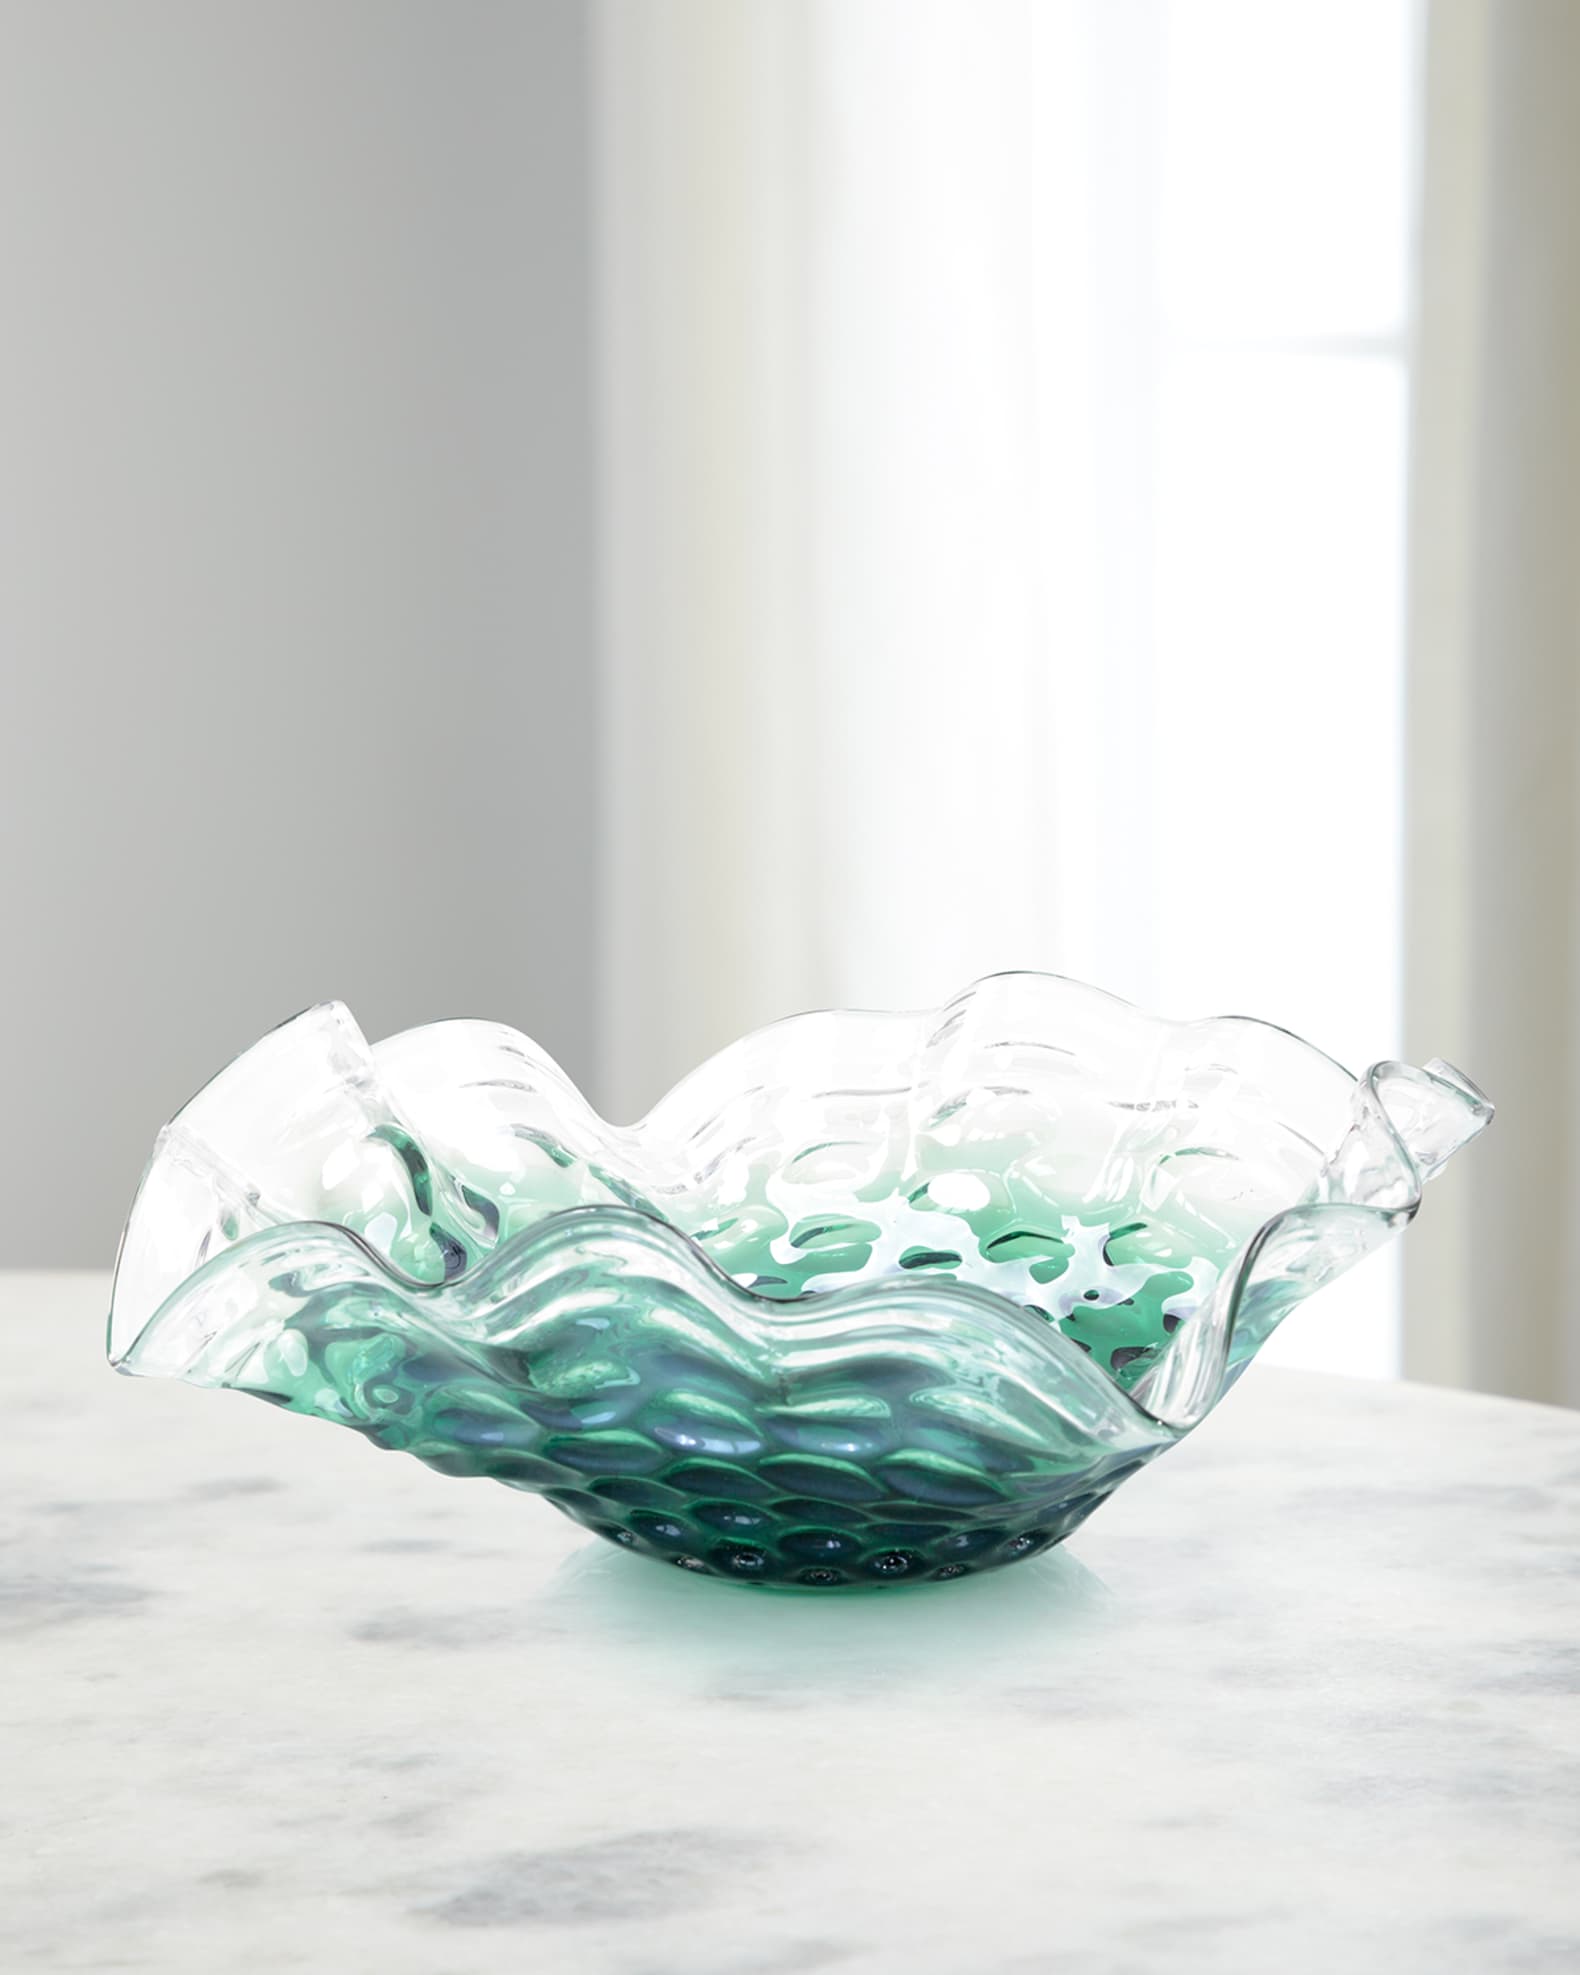 3 × HEADY Glass bowls-The Koji Collection $149.58 - PicClick